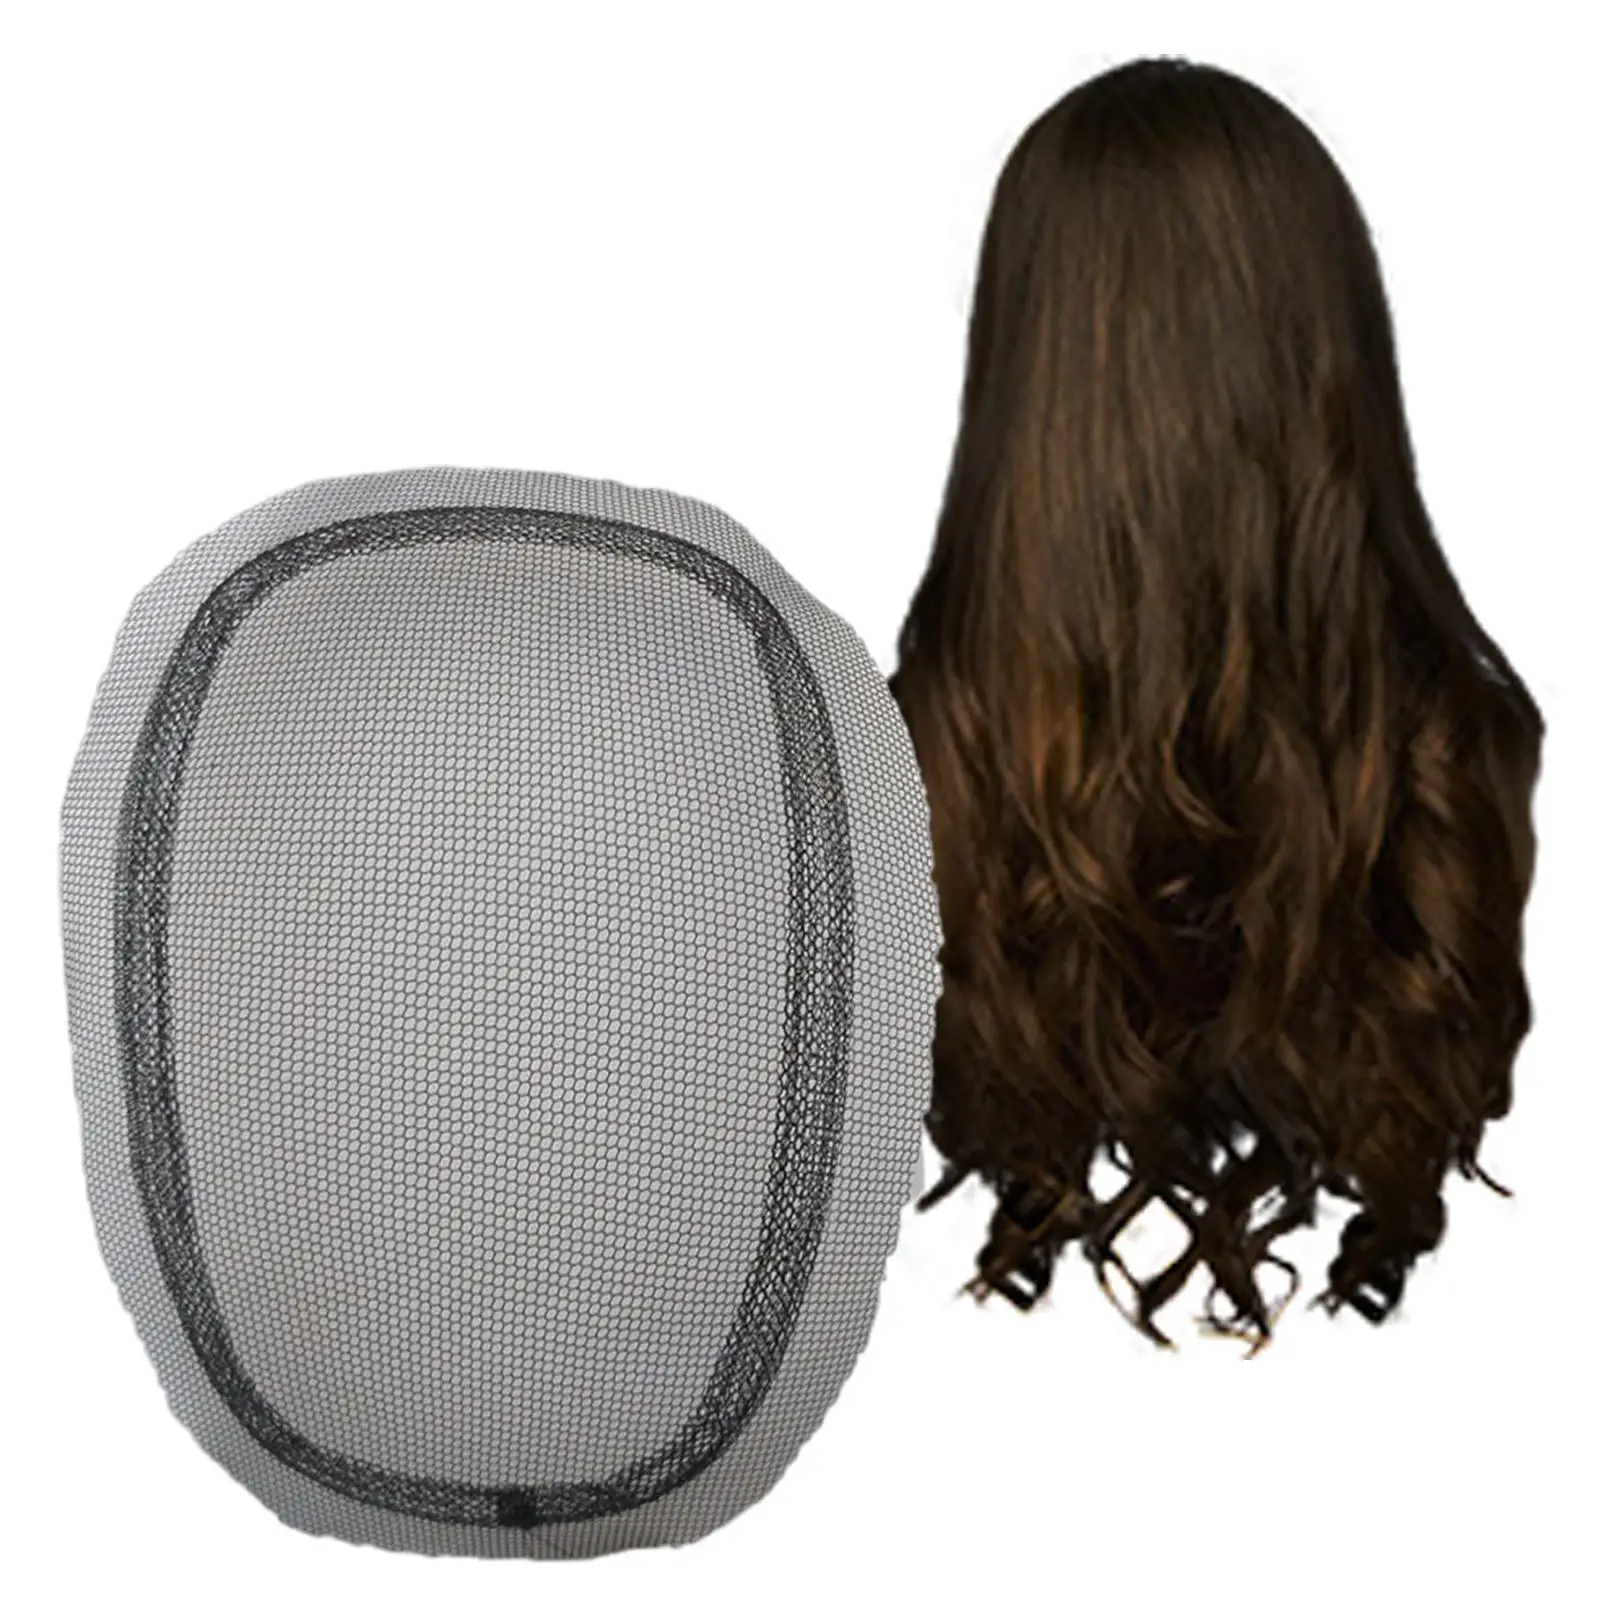 Wig Net Bottom Hair Net Wig Foundation Net for Wig Accessory Making Hair Bun Women Girls - 9x14cm 